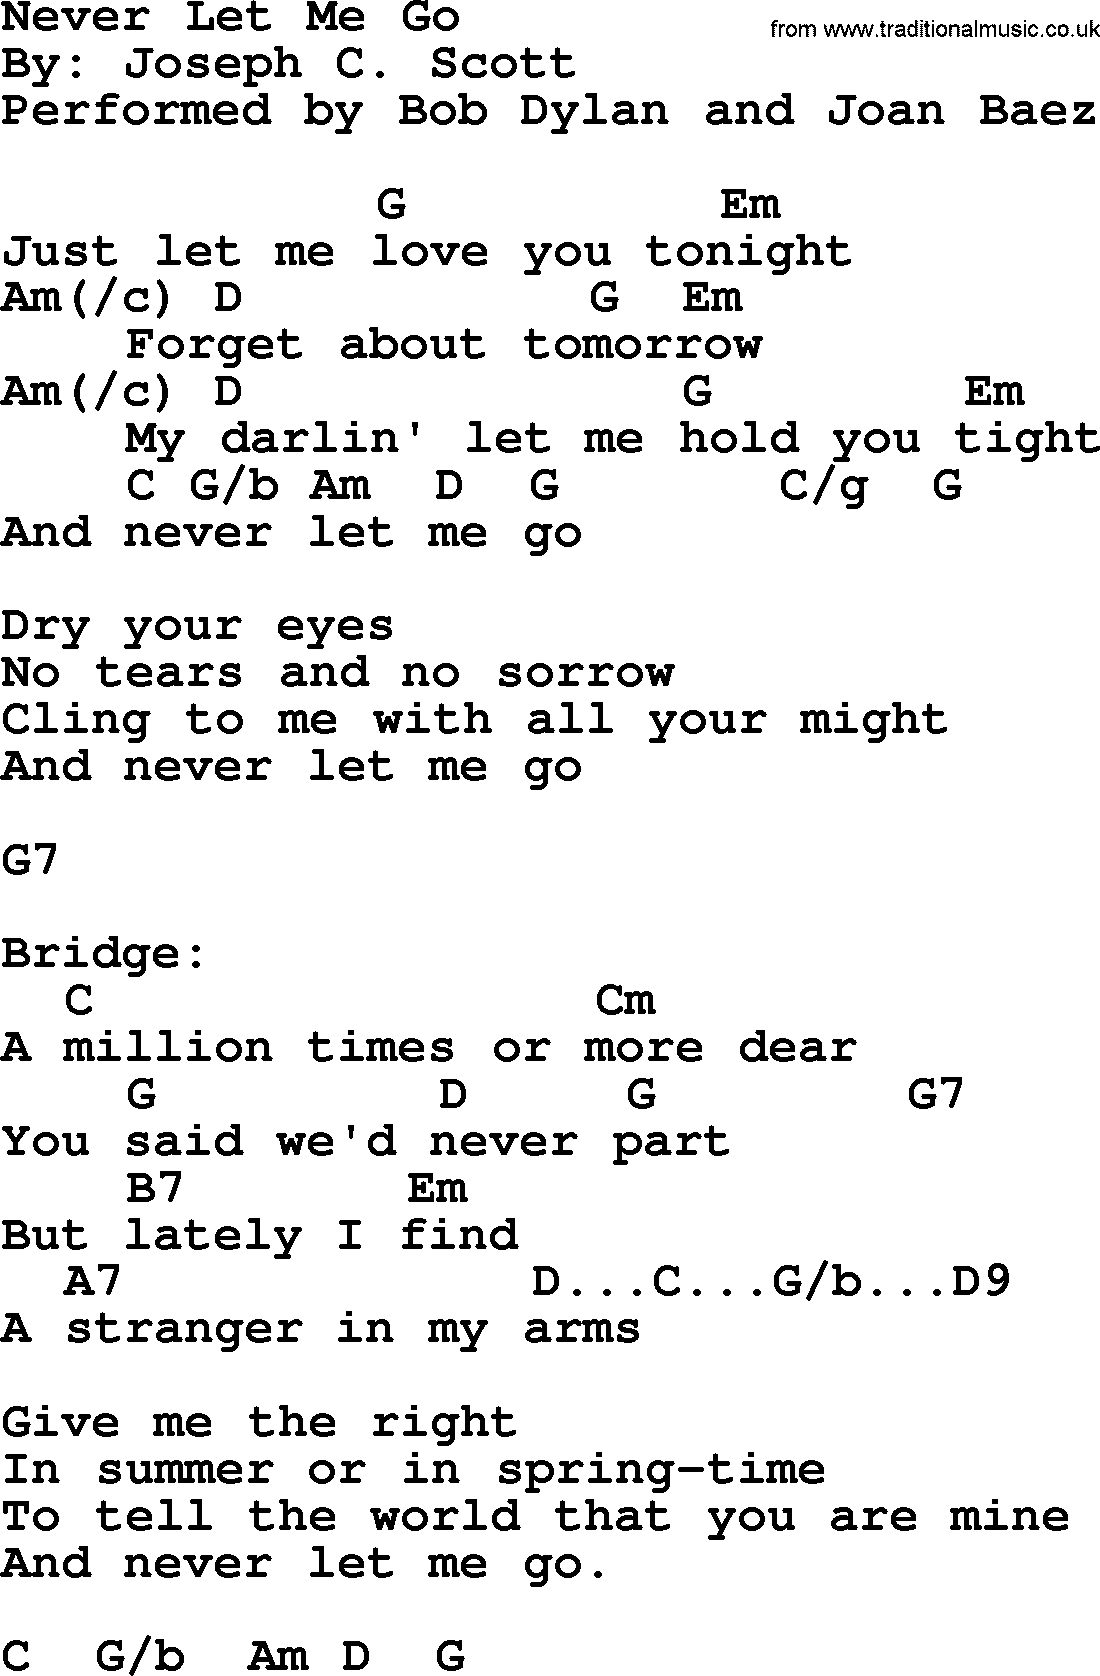 Let It Go Chords Bob Dylan Song Never Let Me Go Lyrics And Chords